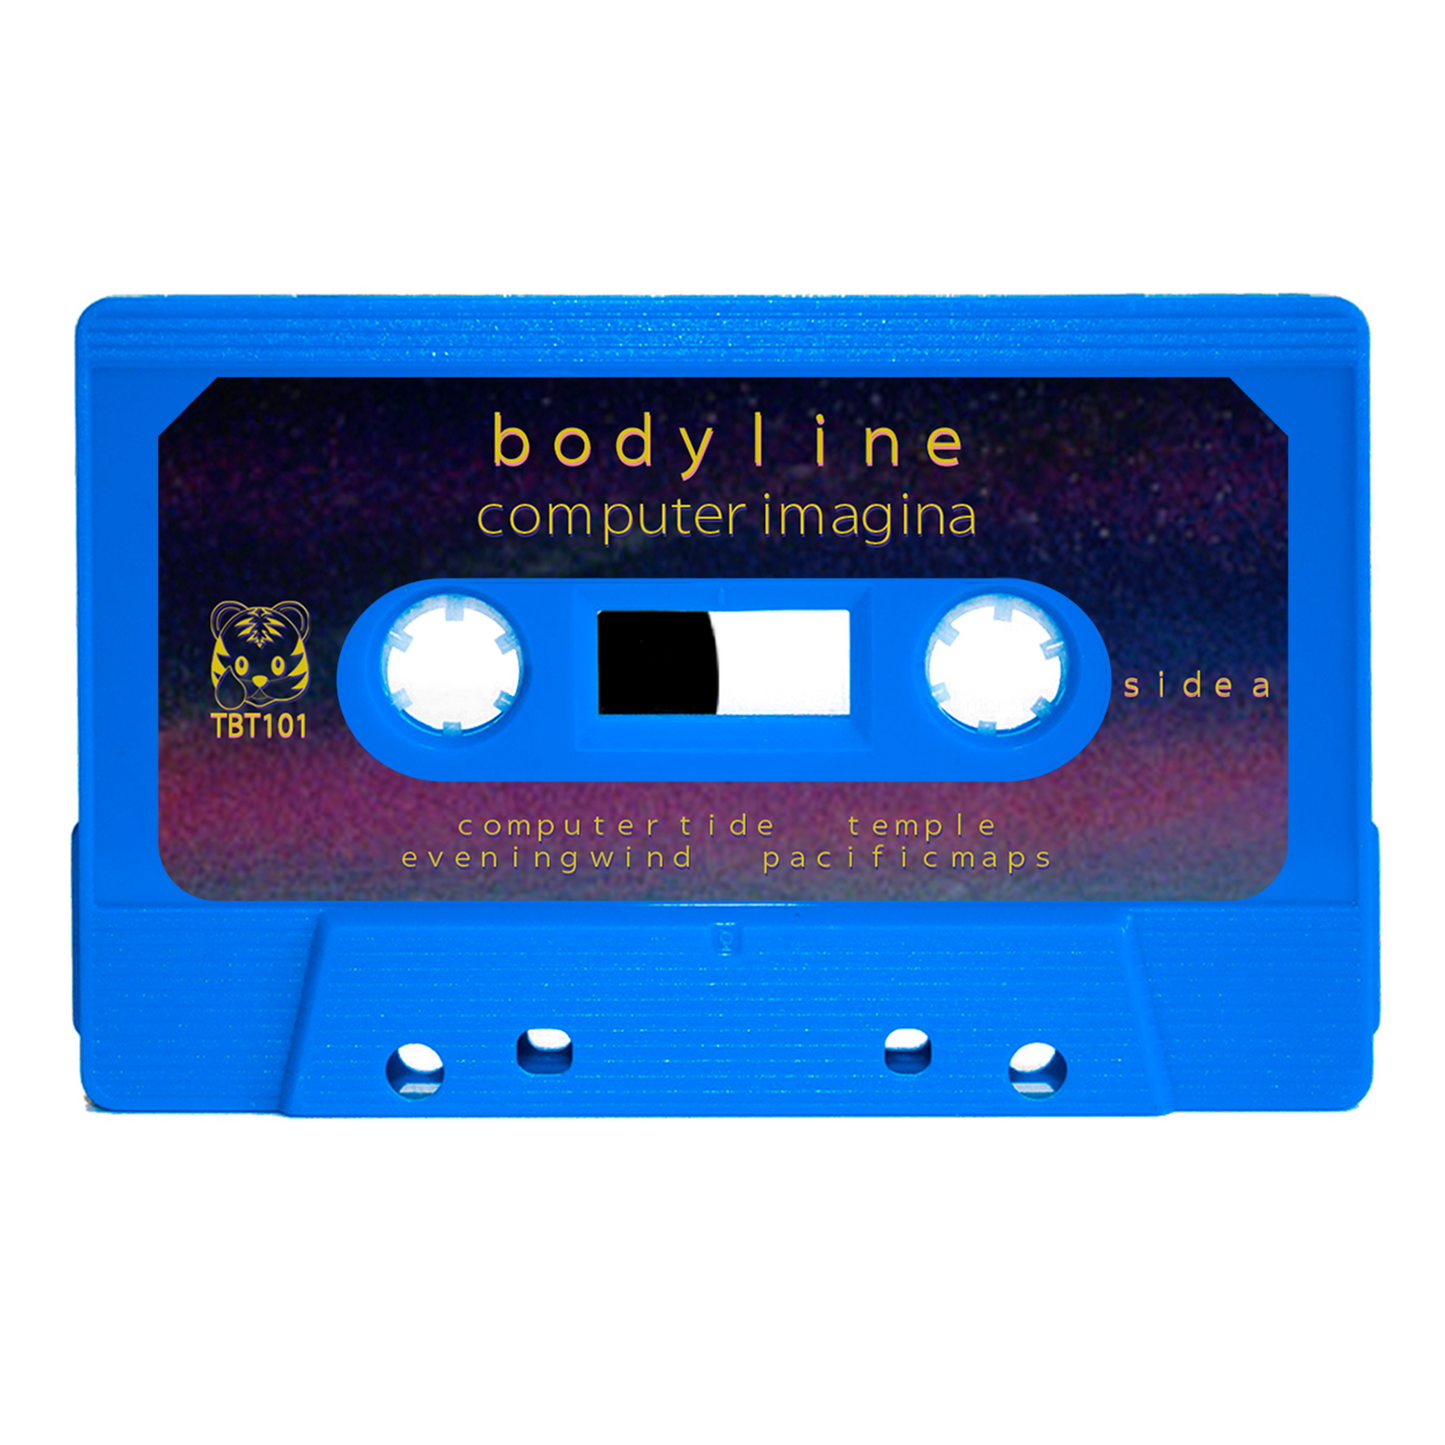 b o d y l i n e - "Computer Imagina" Limited Edition Cassette Tape